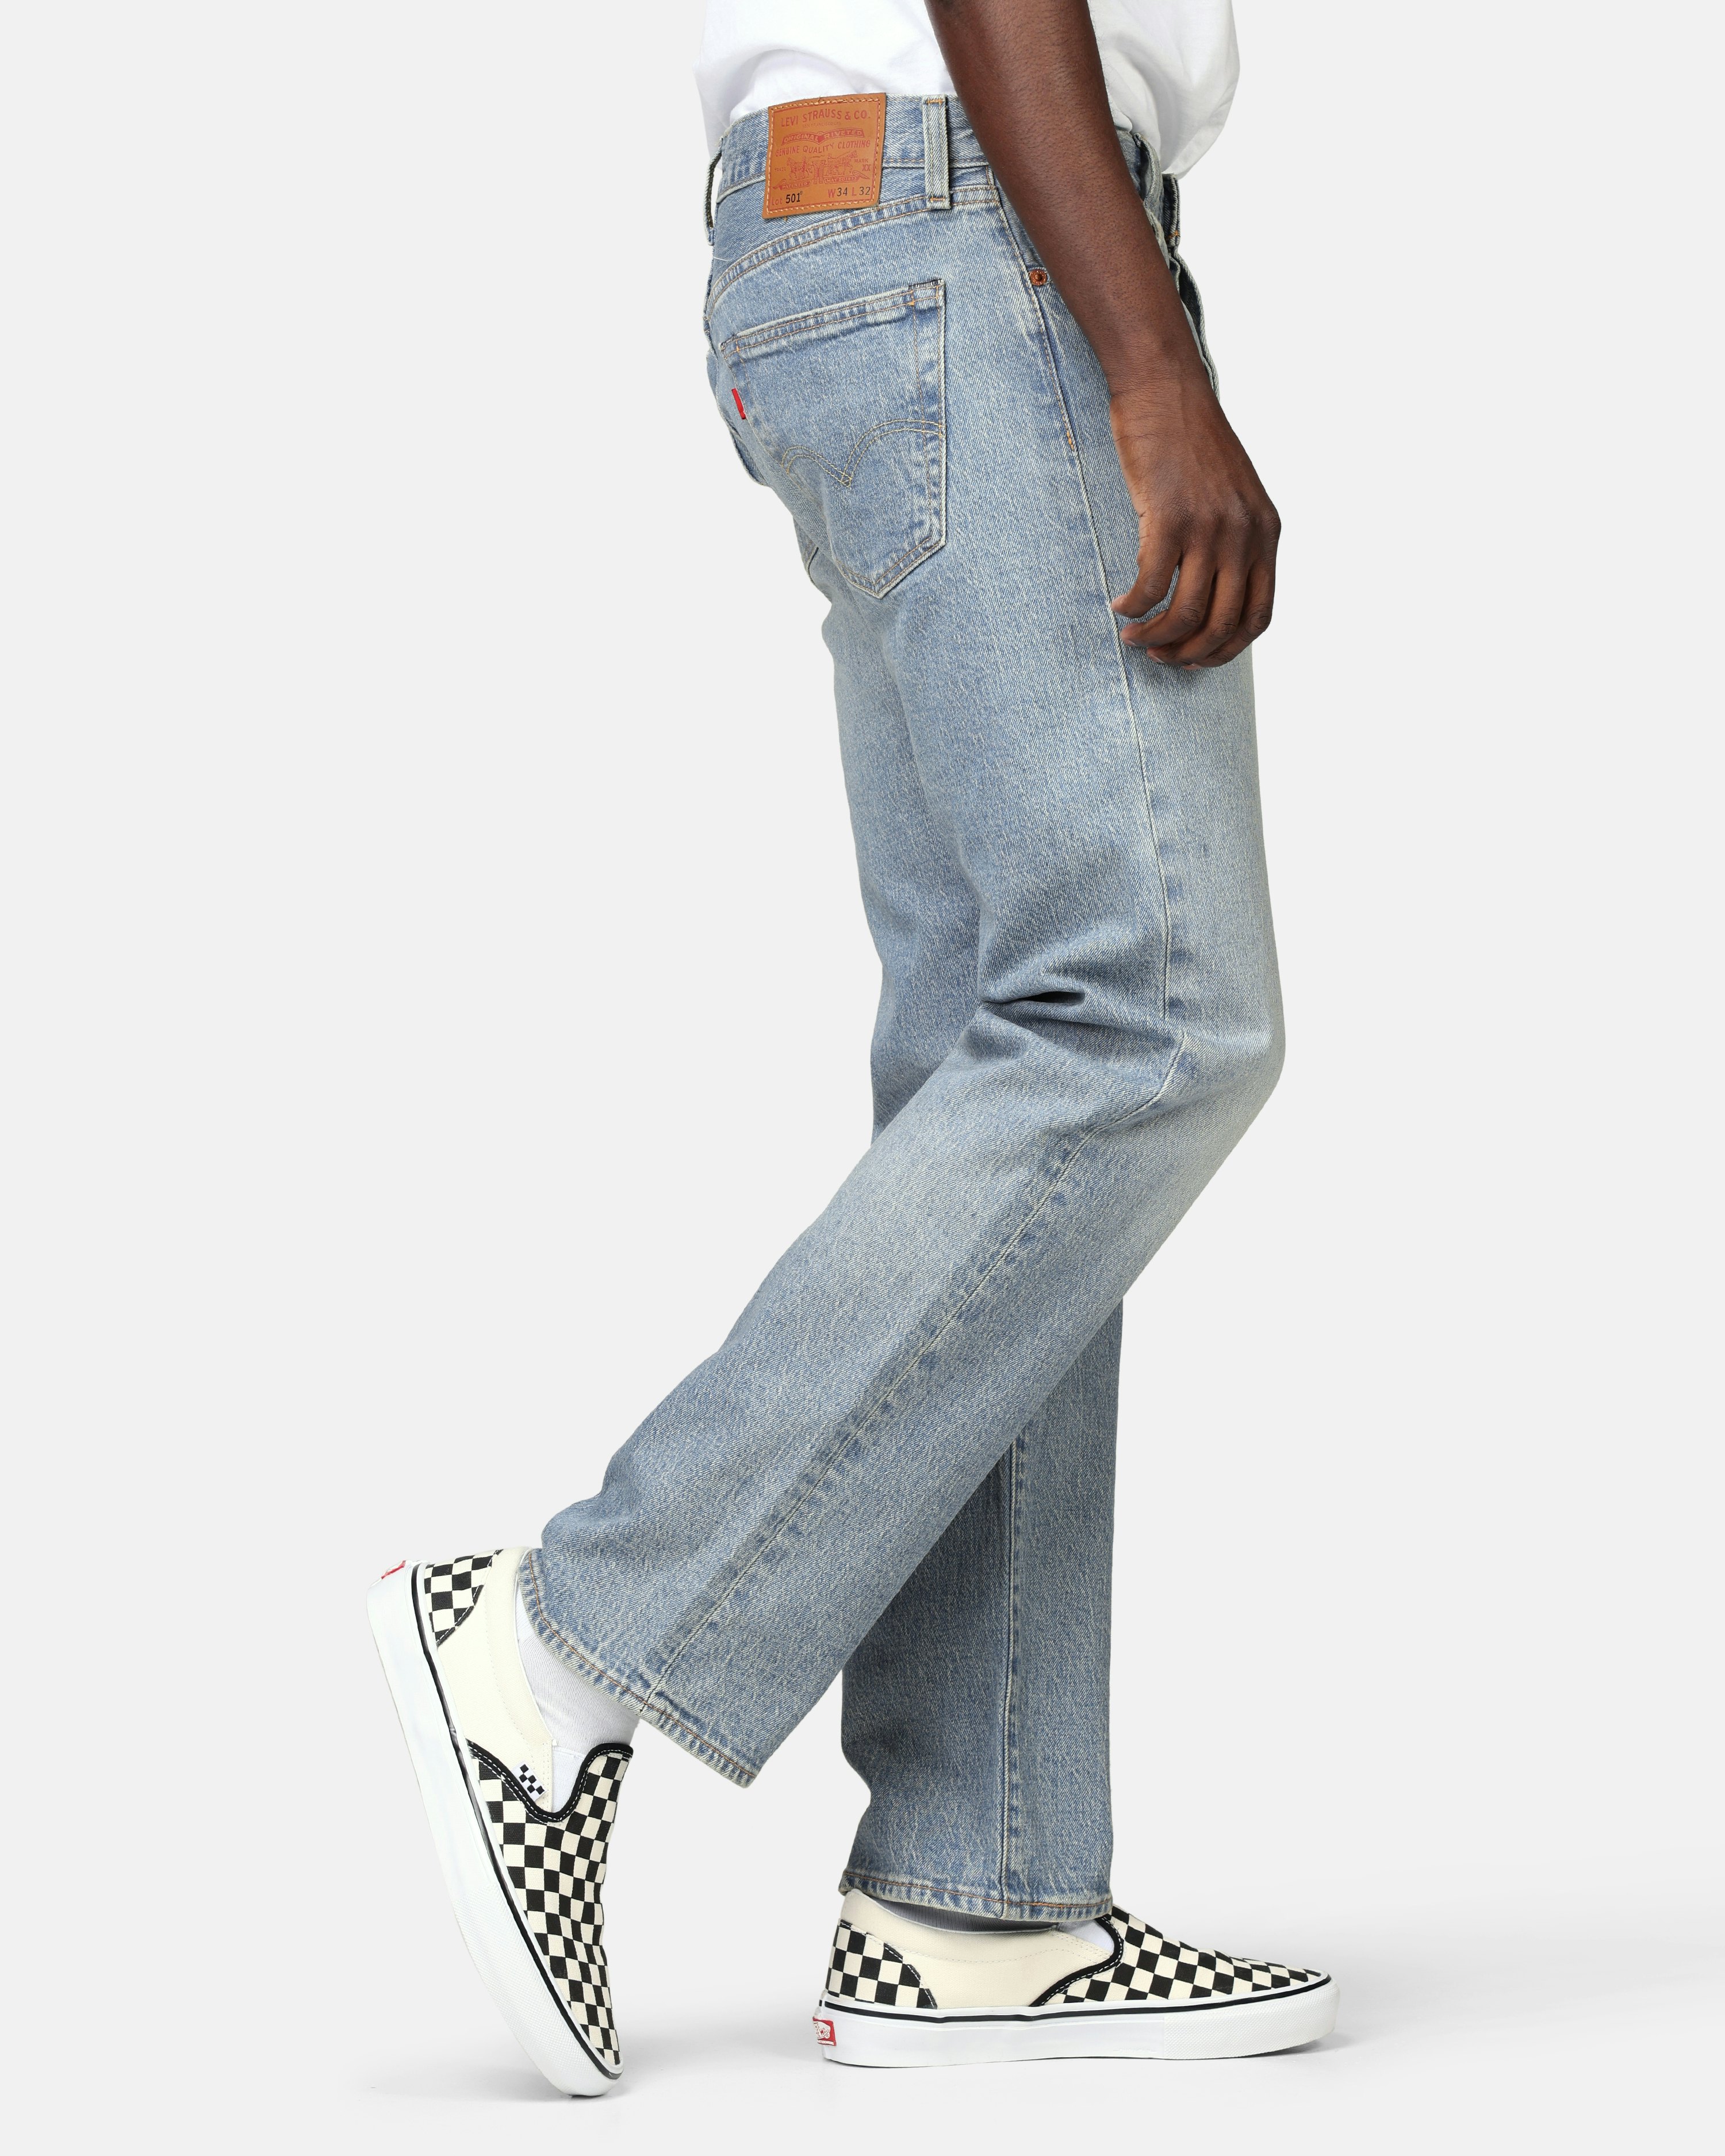 Levis Jeans - 501 The Original Silver | Men | Junkyard